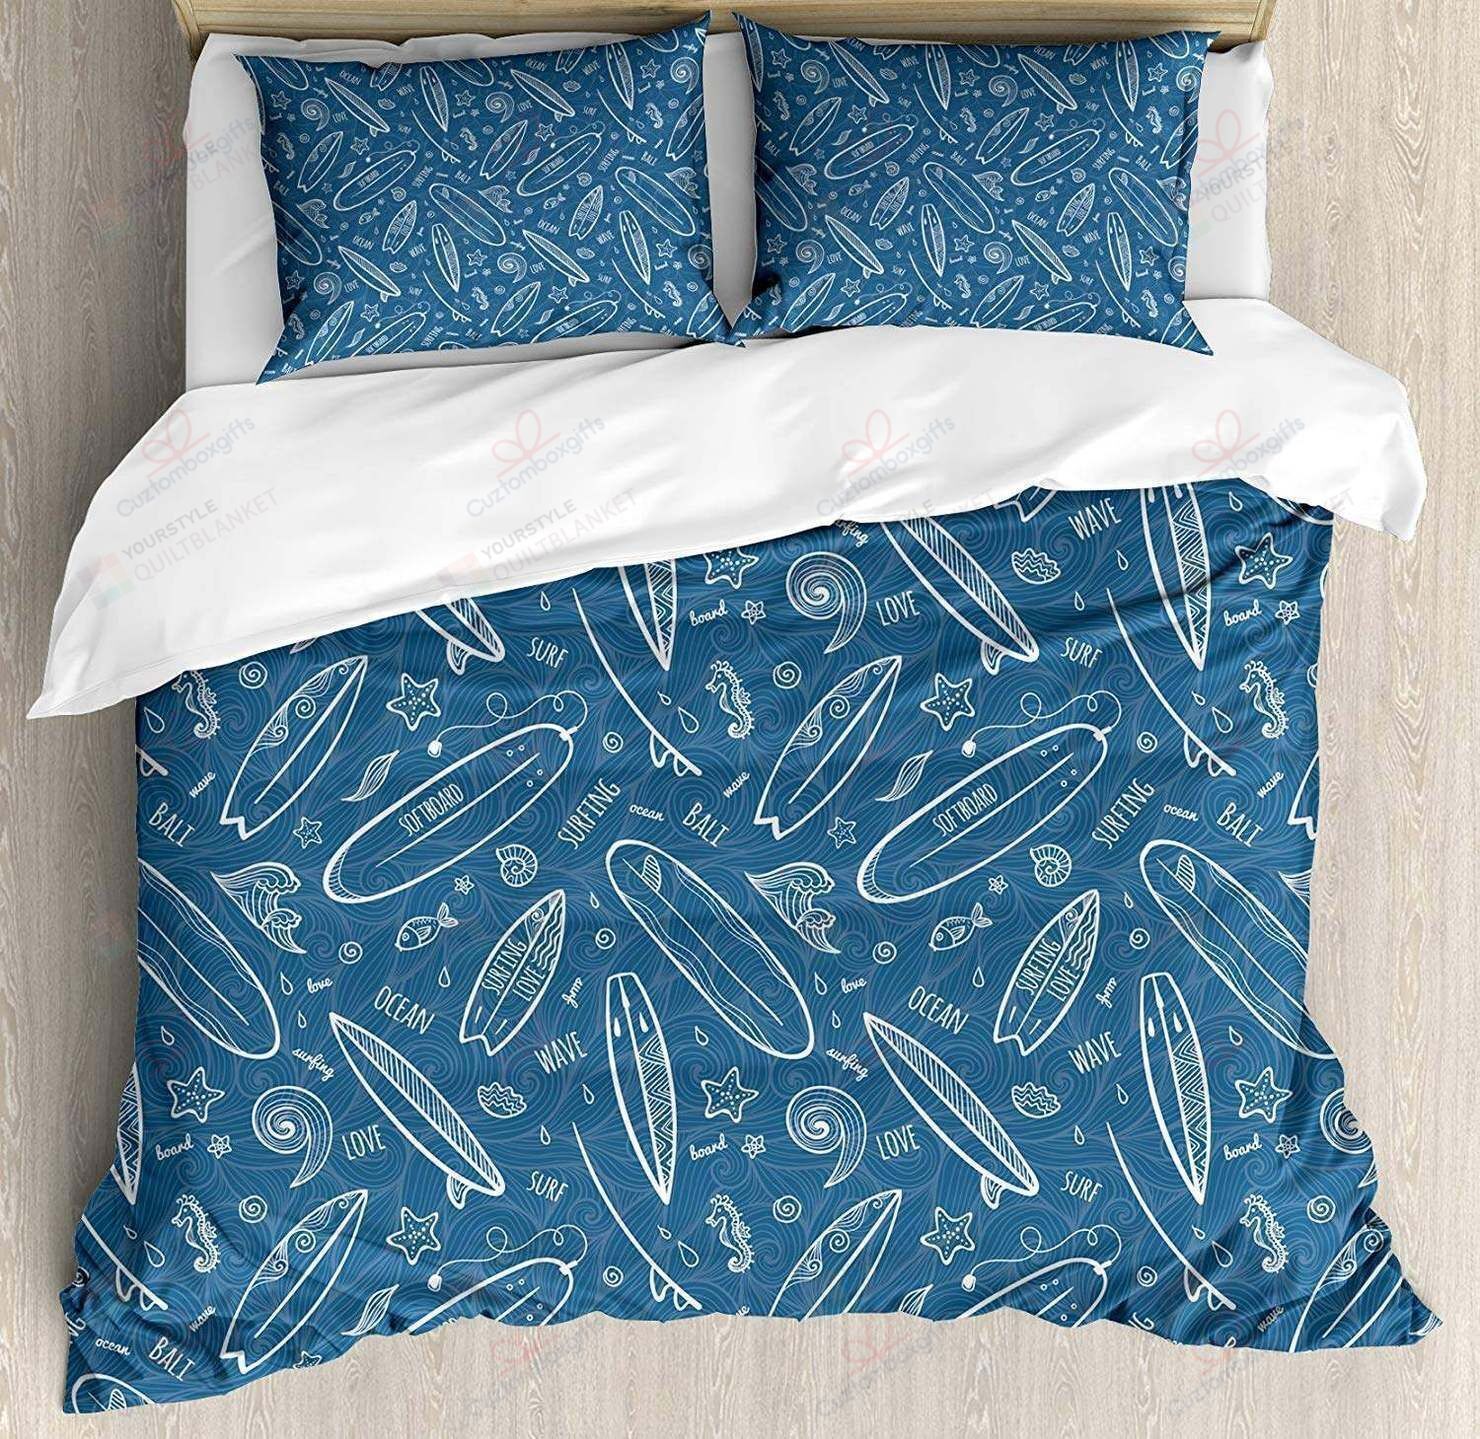 Surfboard Cotton Bed Sheets Spread Comforter Duvet Cover Bedding Sets